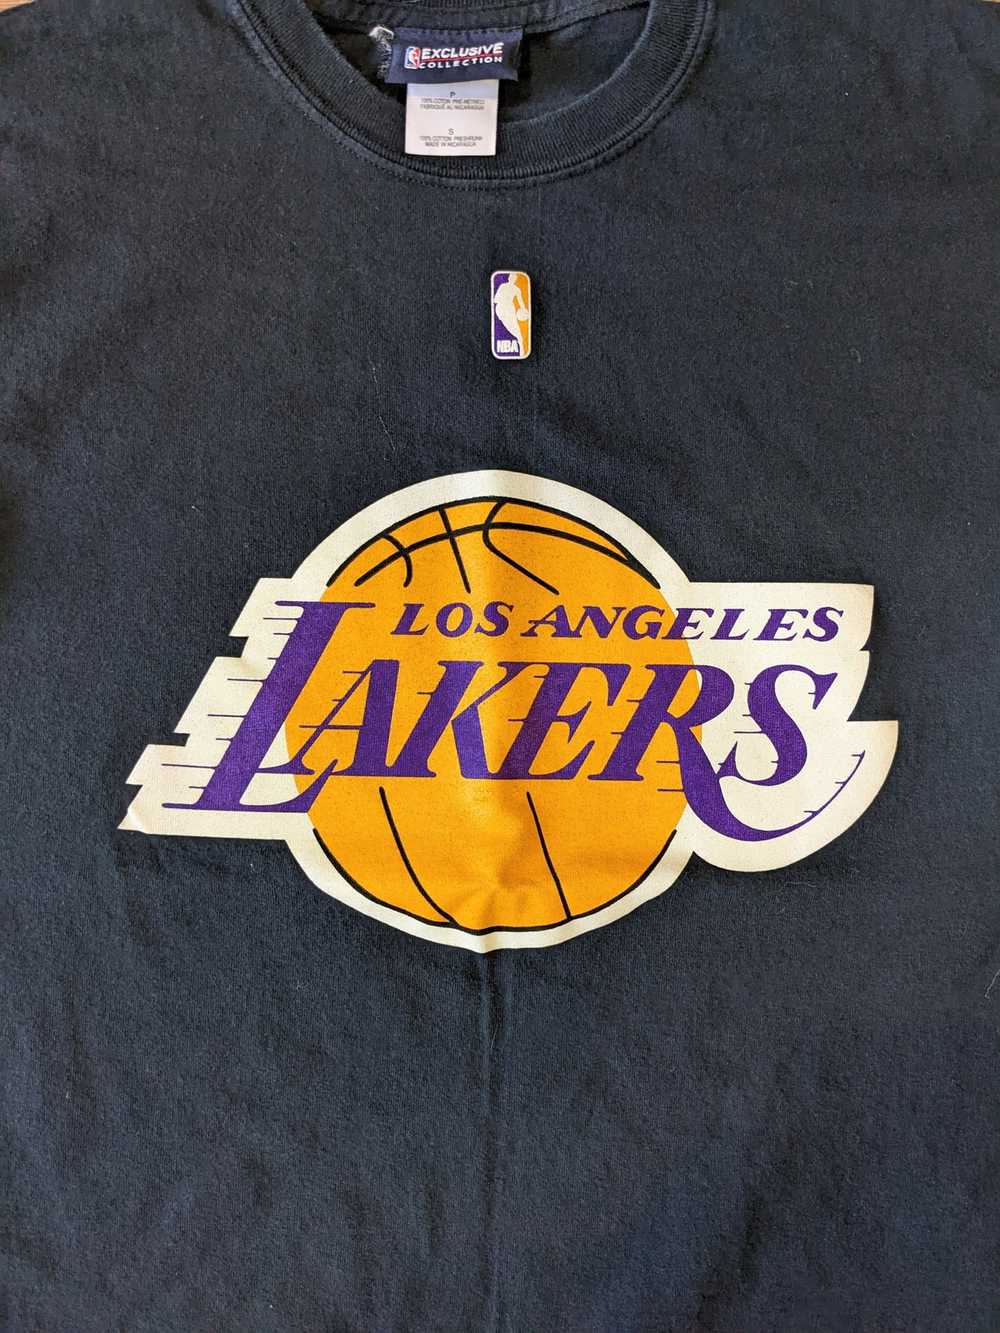 NBA NBA Exclusive Los Angeles Lakers logo t-shirt - image 2